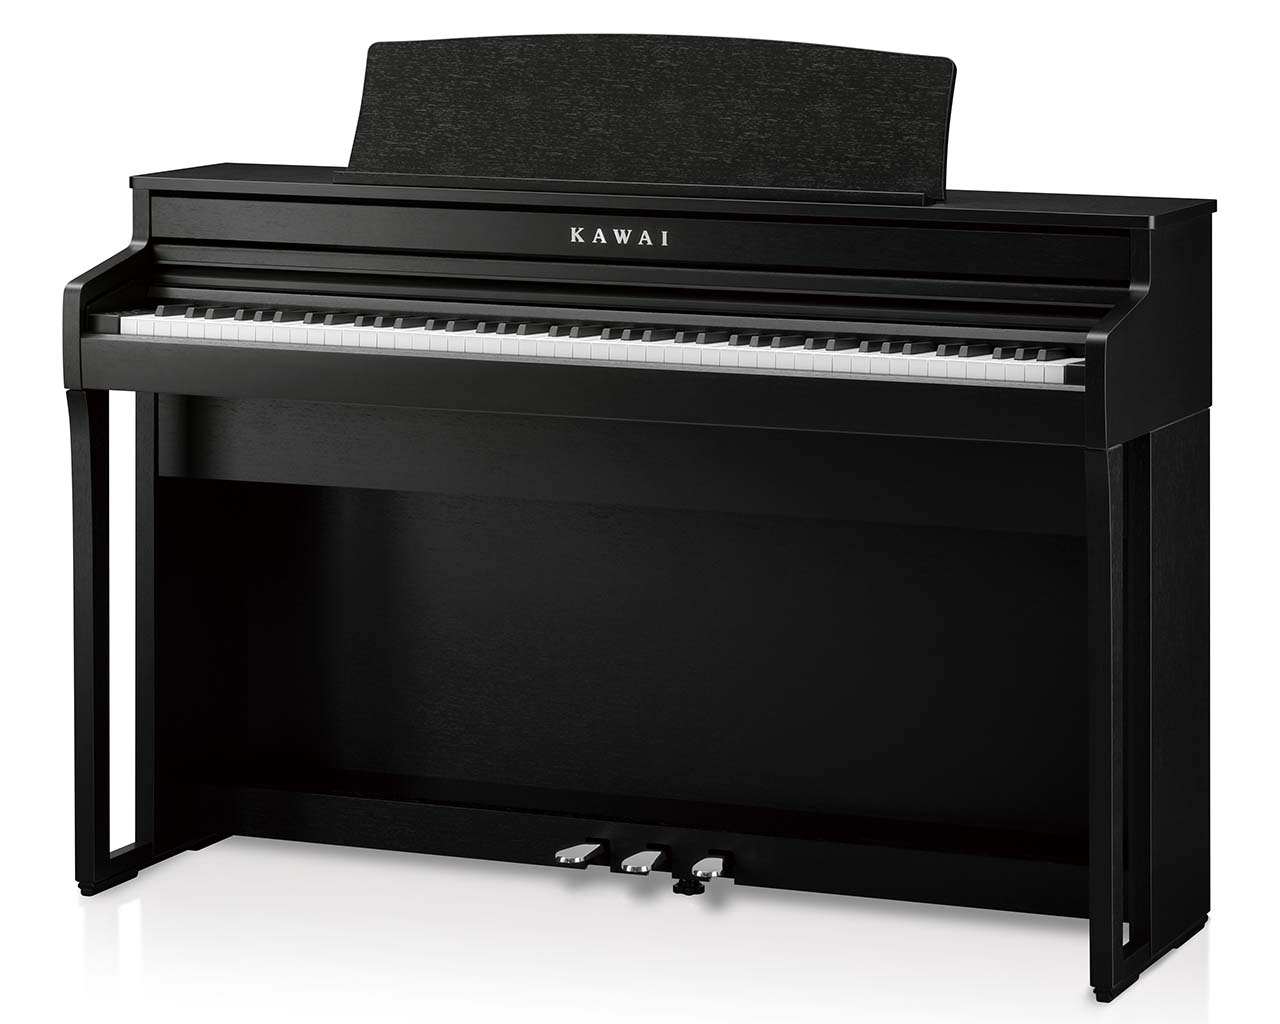 Kawai-CA-49-B-Digitalpiano-schwarz-Pianohaus-Filipski